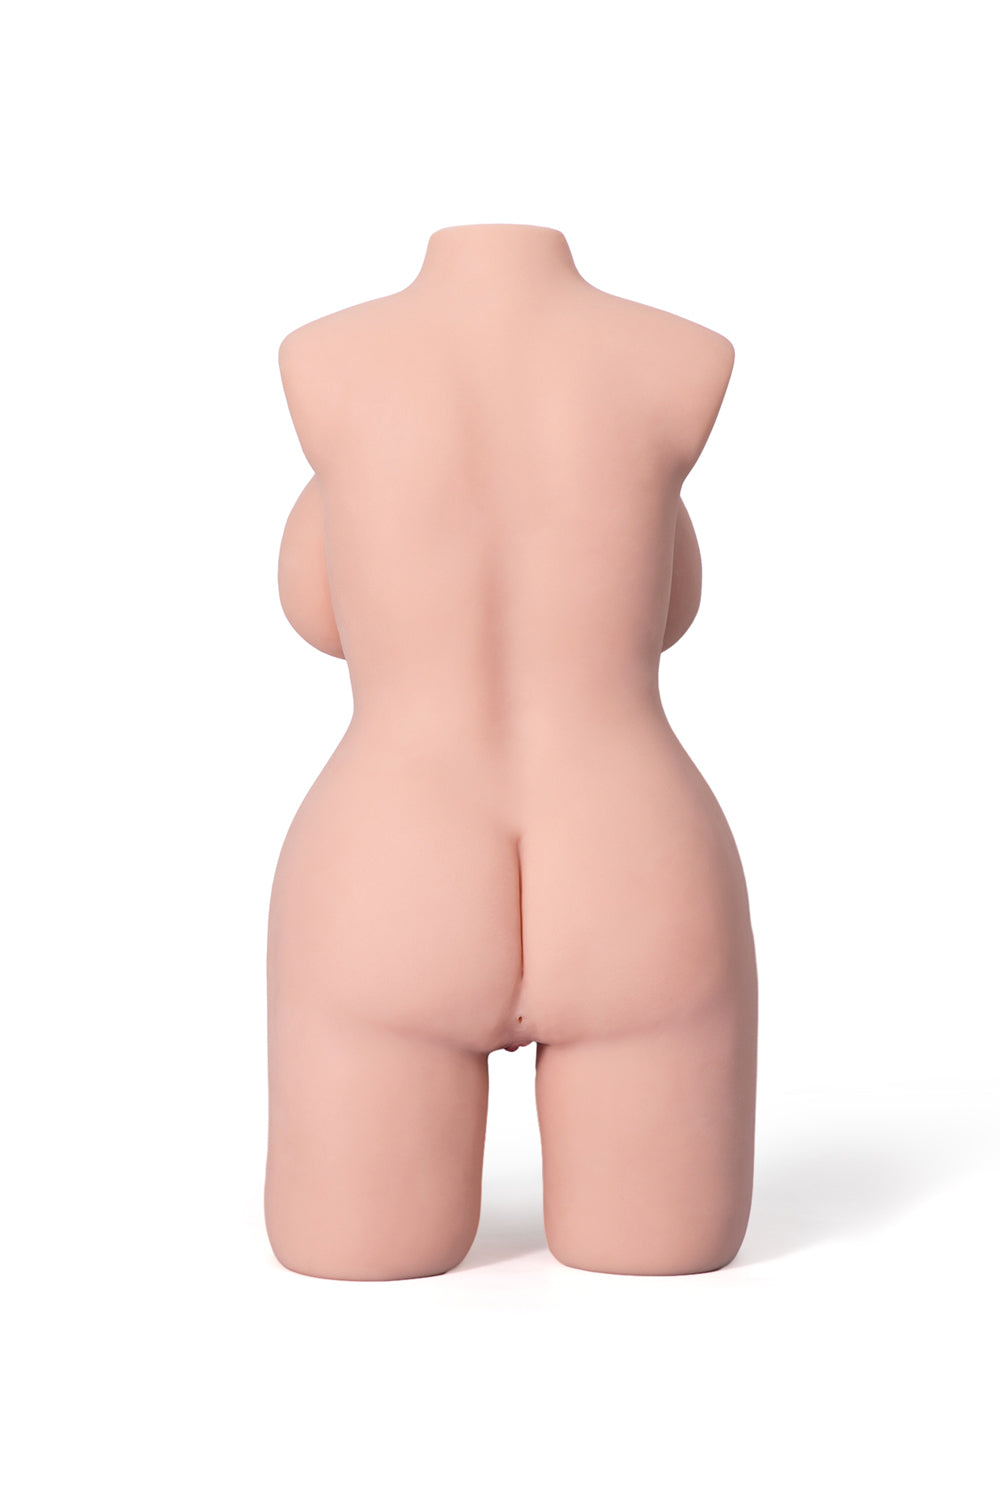 US Stock - TPE Adult Love Doll Torso Realistic Sex Torso Doll Half Body Sex Toy for Men